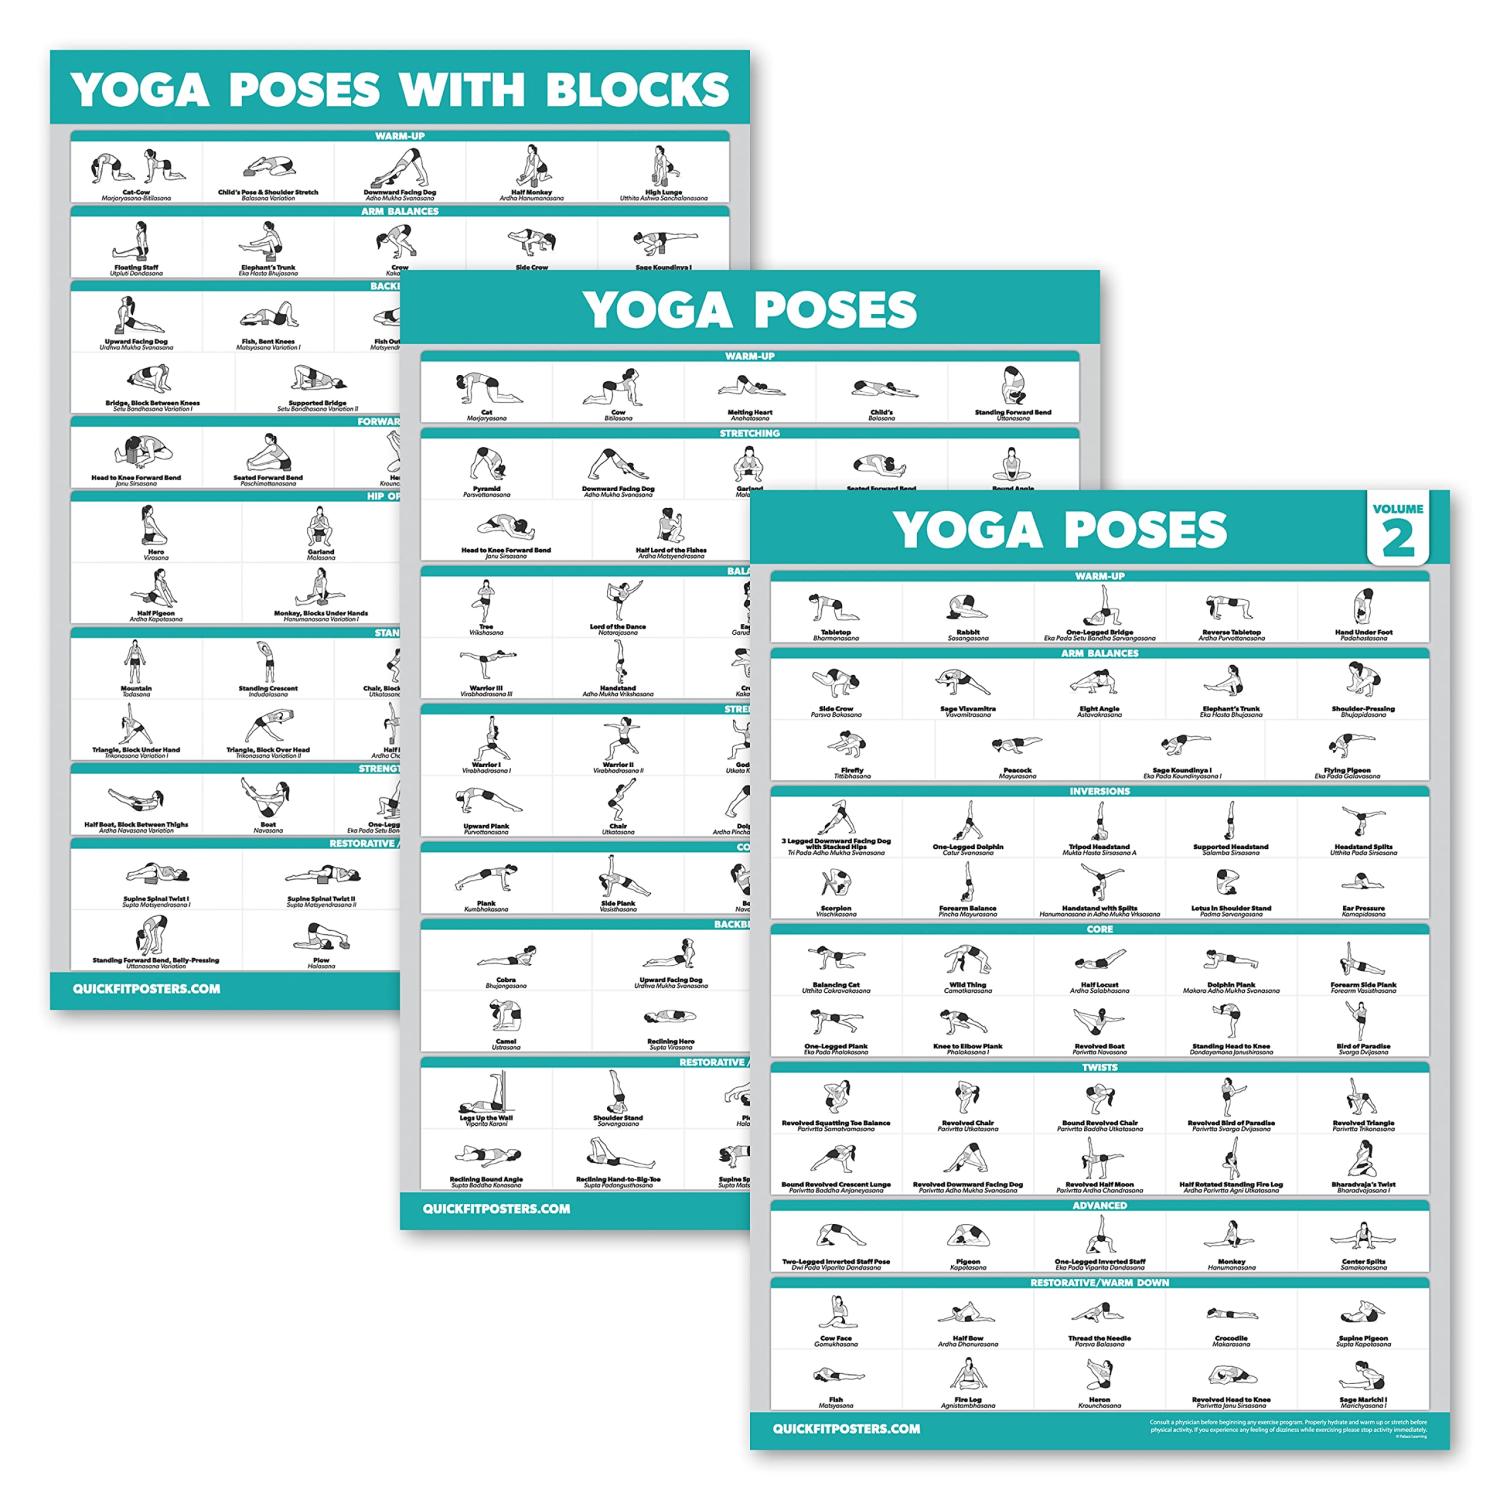 10 Standing yoga asanas that increase strength & balance | आर्ट ऑफ लिव्हिंग  इंडिया